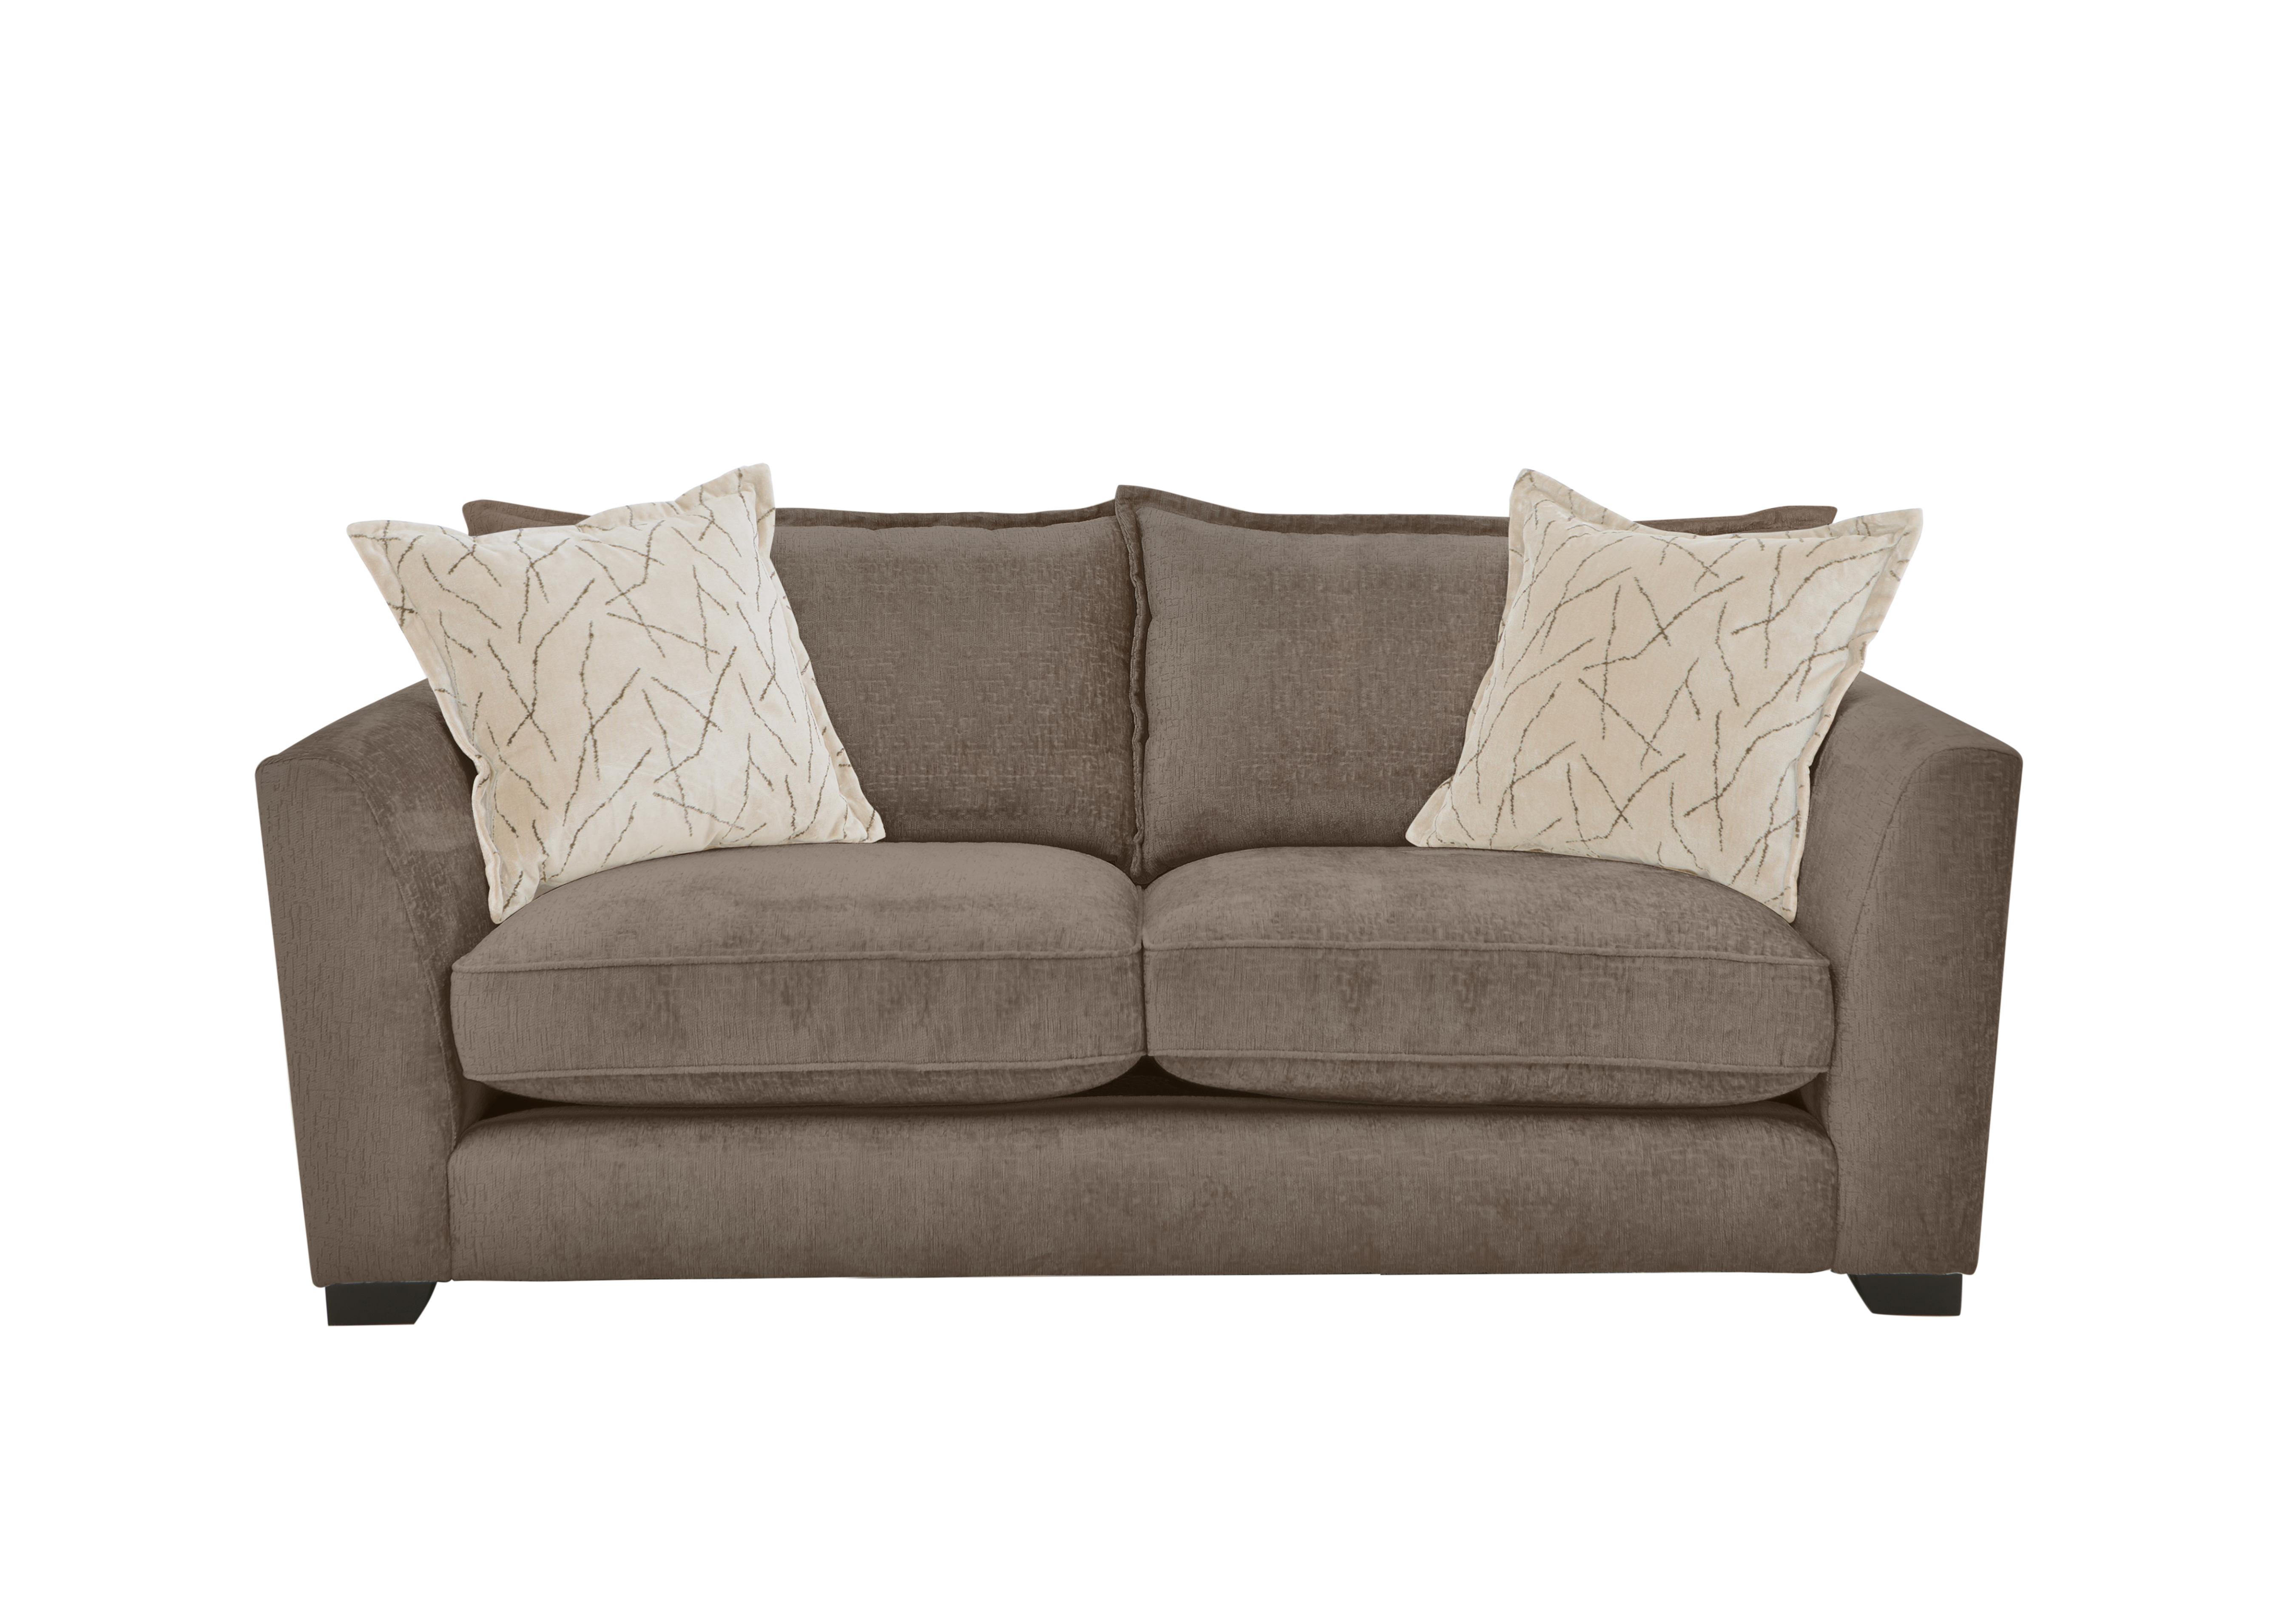 Boutique Lavish Fabric 3 Seater Classic Back Sofa in Alexandra Coco on Furniture Village